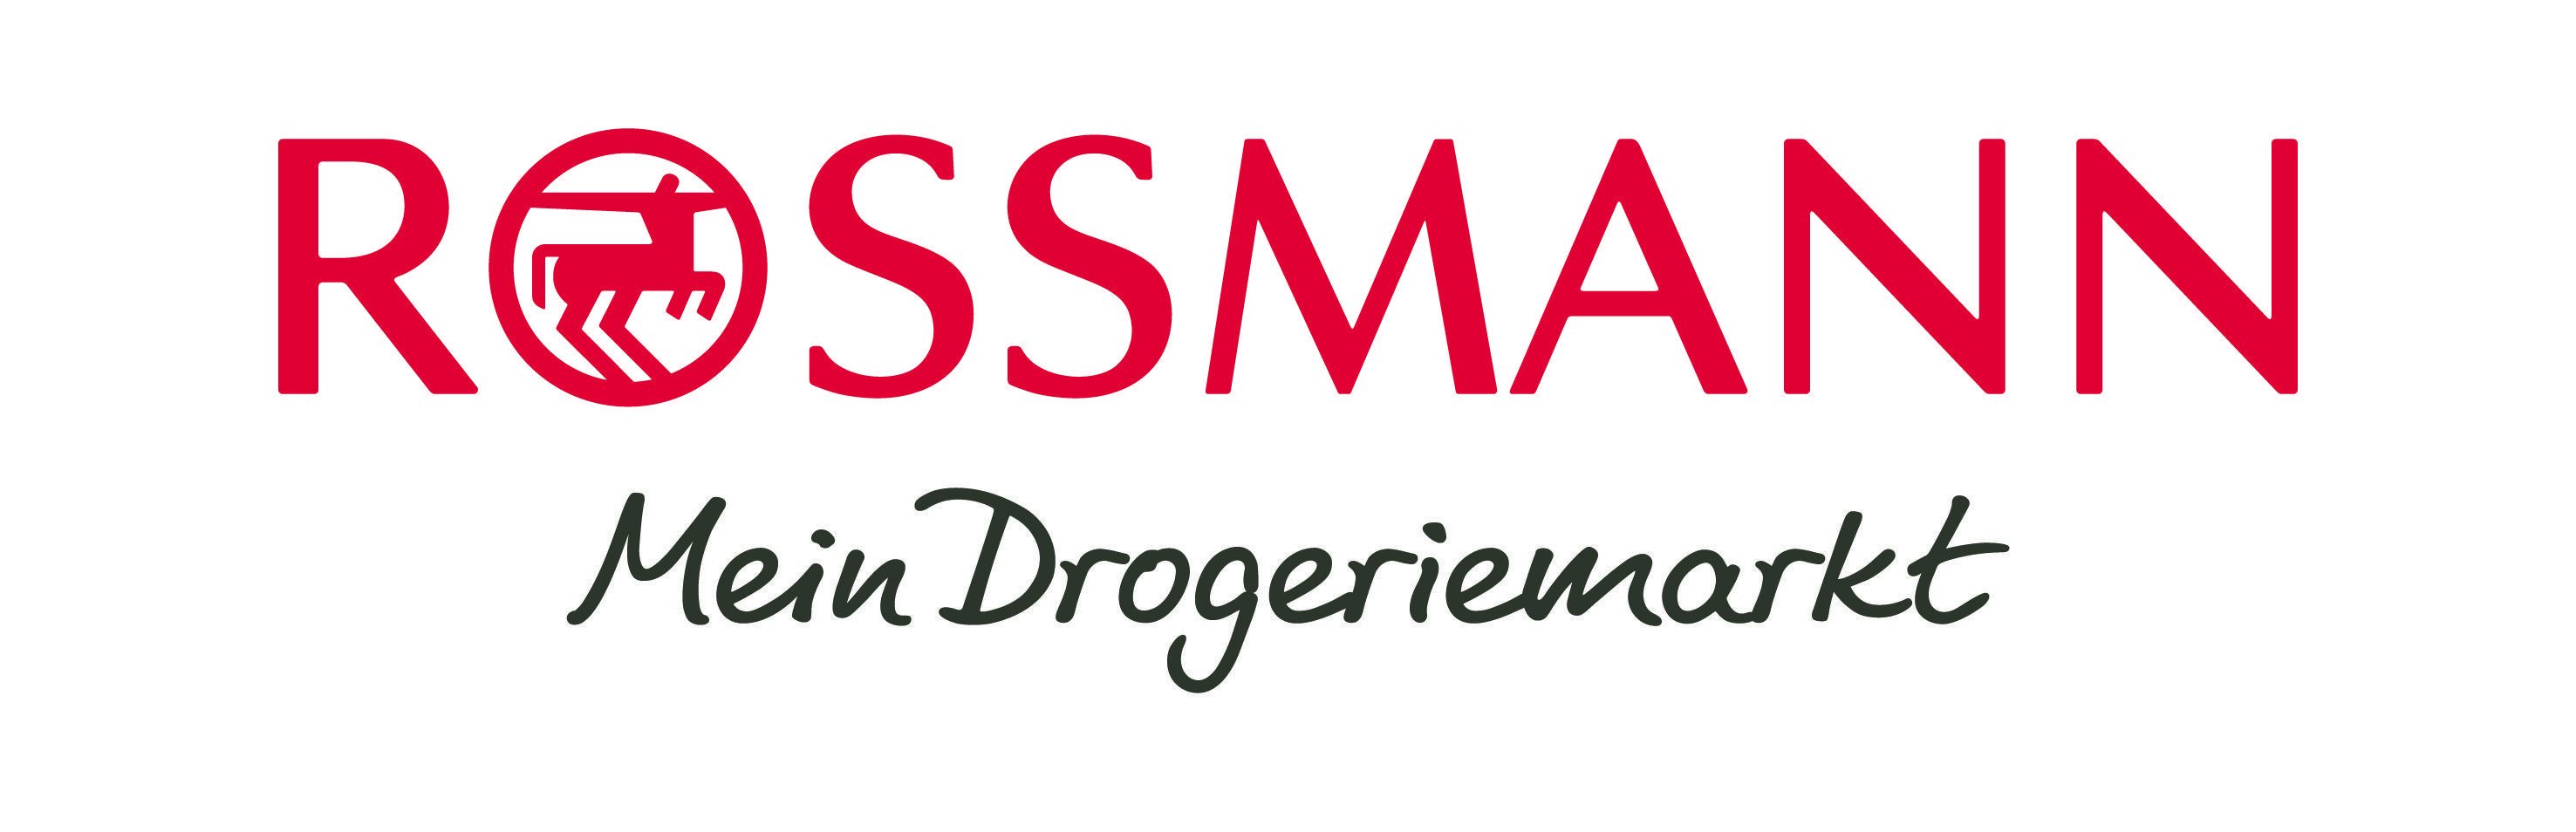 Rossmann Logo - Logos